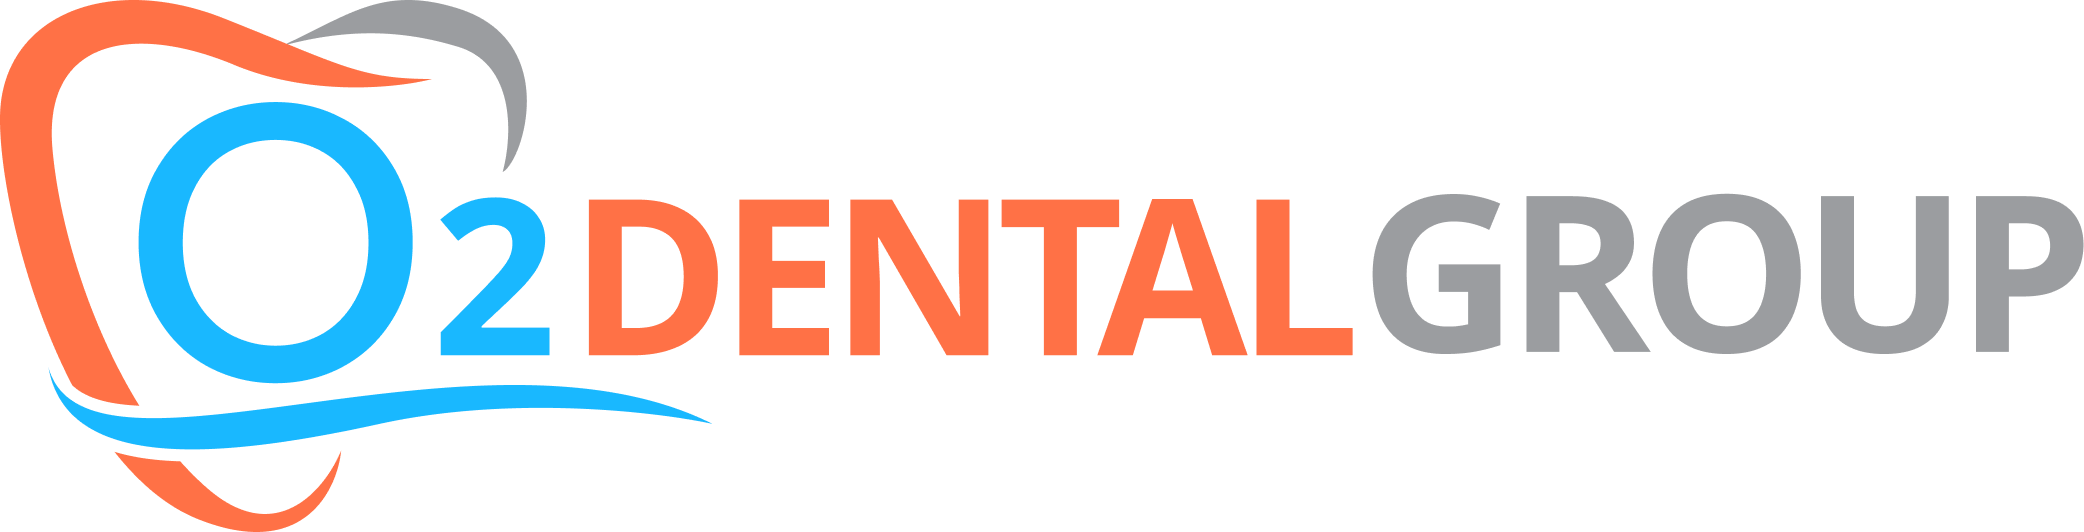 O2 Dental Group of Southern Pines - logo